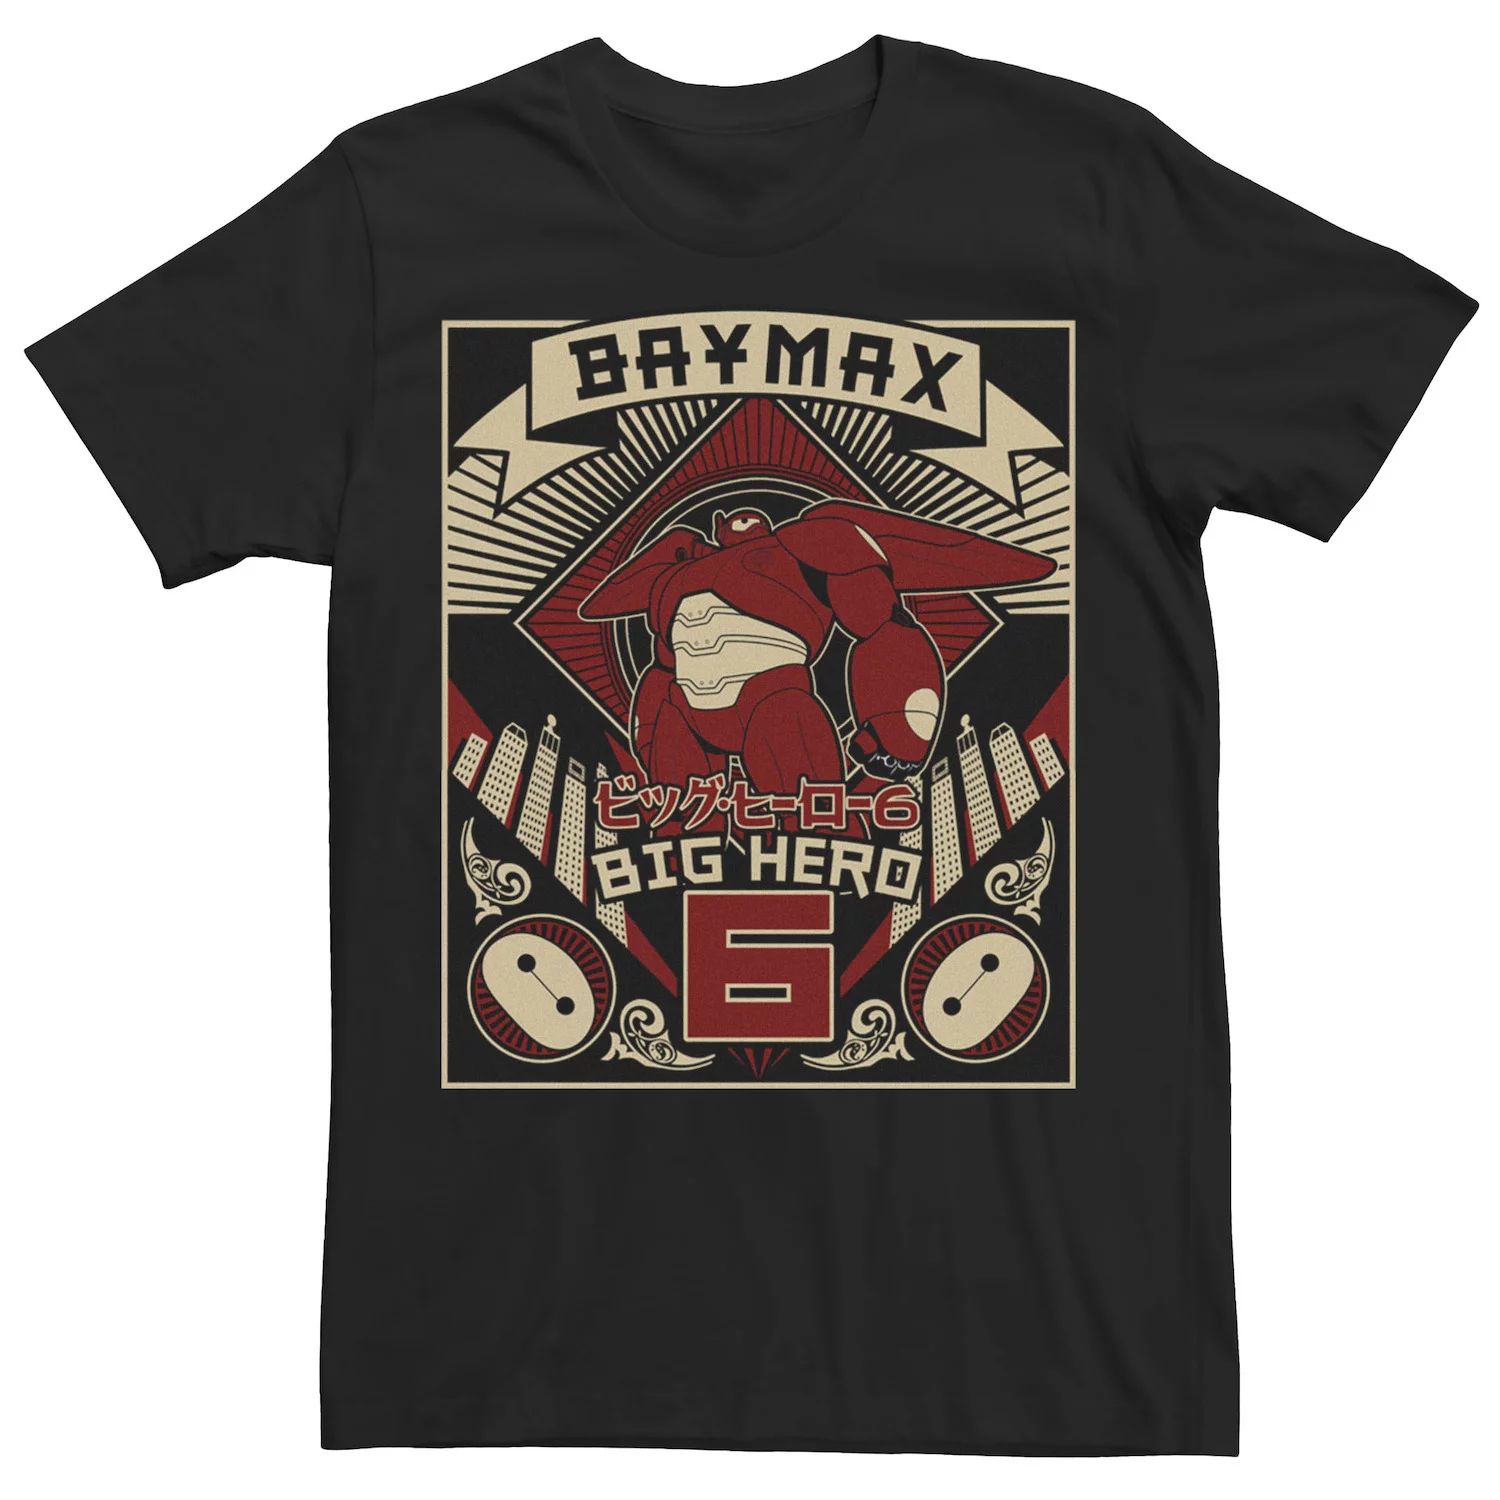 Мужская футболка с пропагандистским плакатом Big Hero 6 Baymax Disney